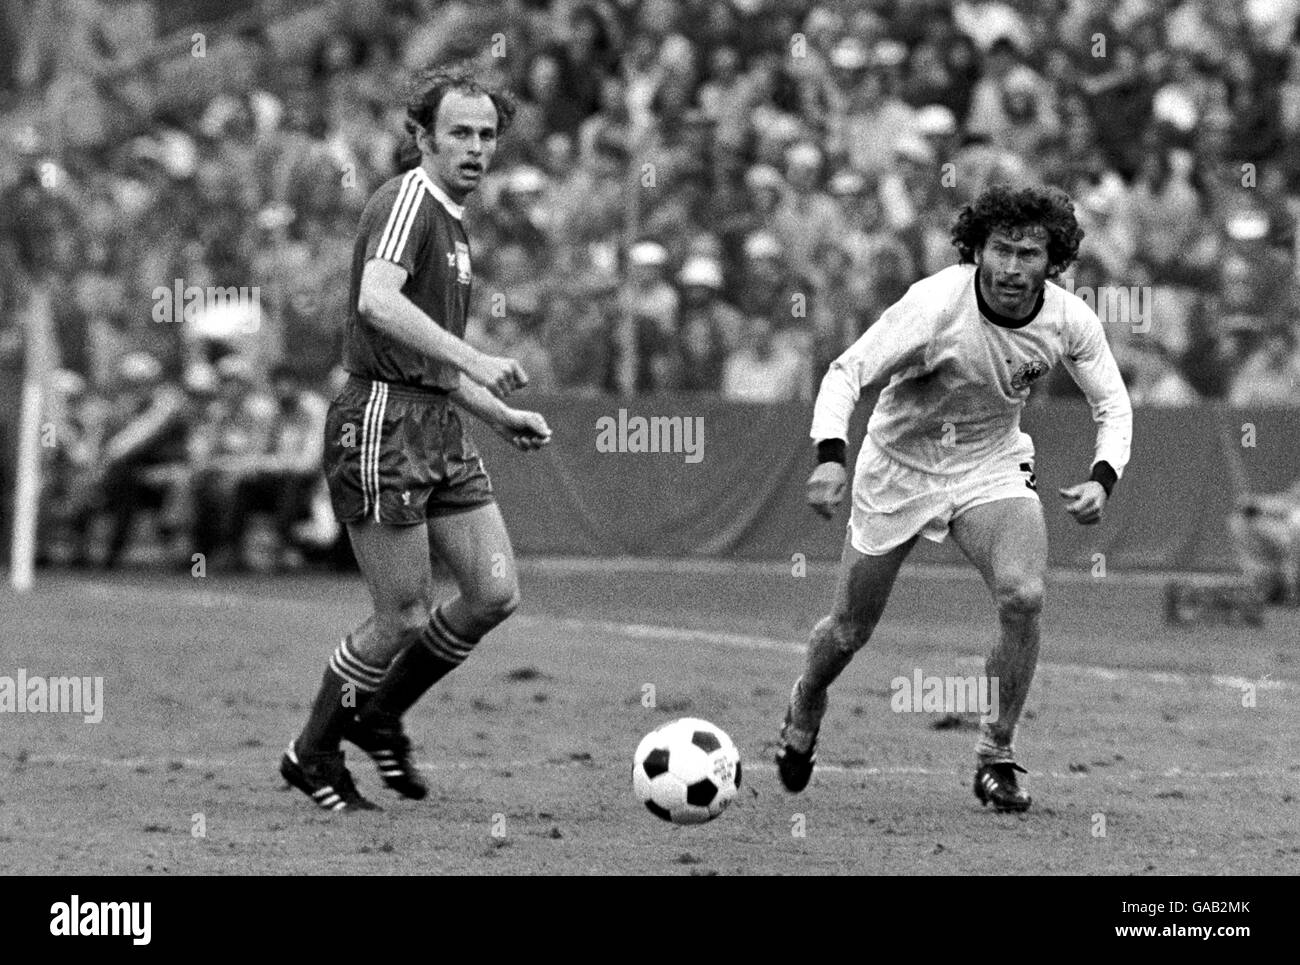 Soccer - World Cup 1974 West Germany - Second Round - West Germany v Poland - Waldstadion, Frankfurt. West Germany's Paul Breitner (r) makes a run past Poland's Grzegorz Lato (l) Stock Photo